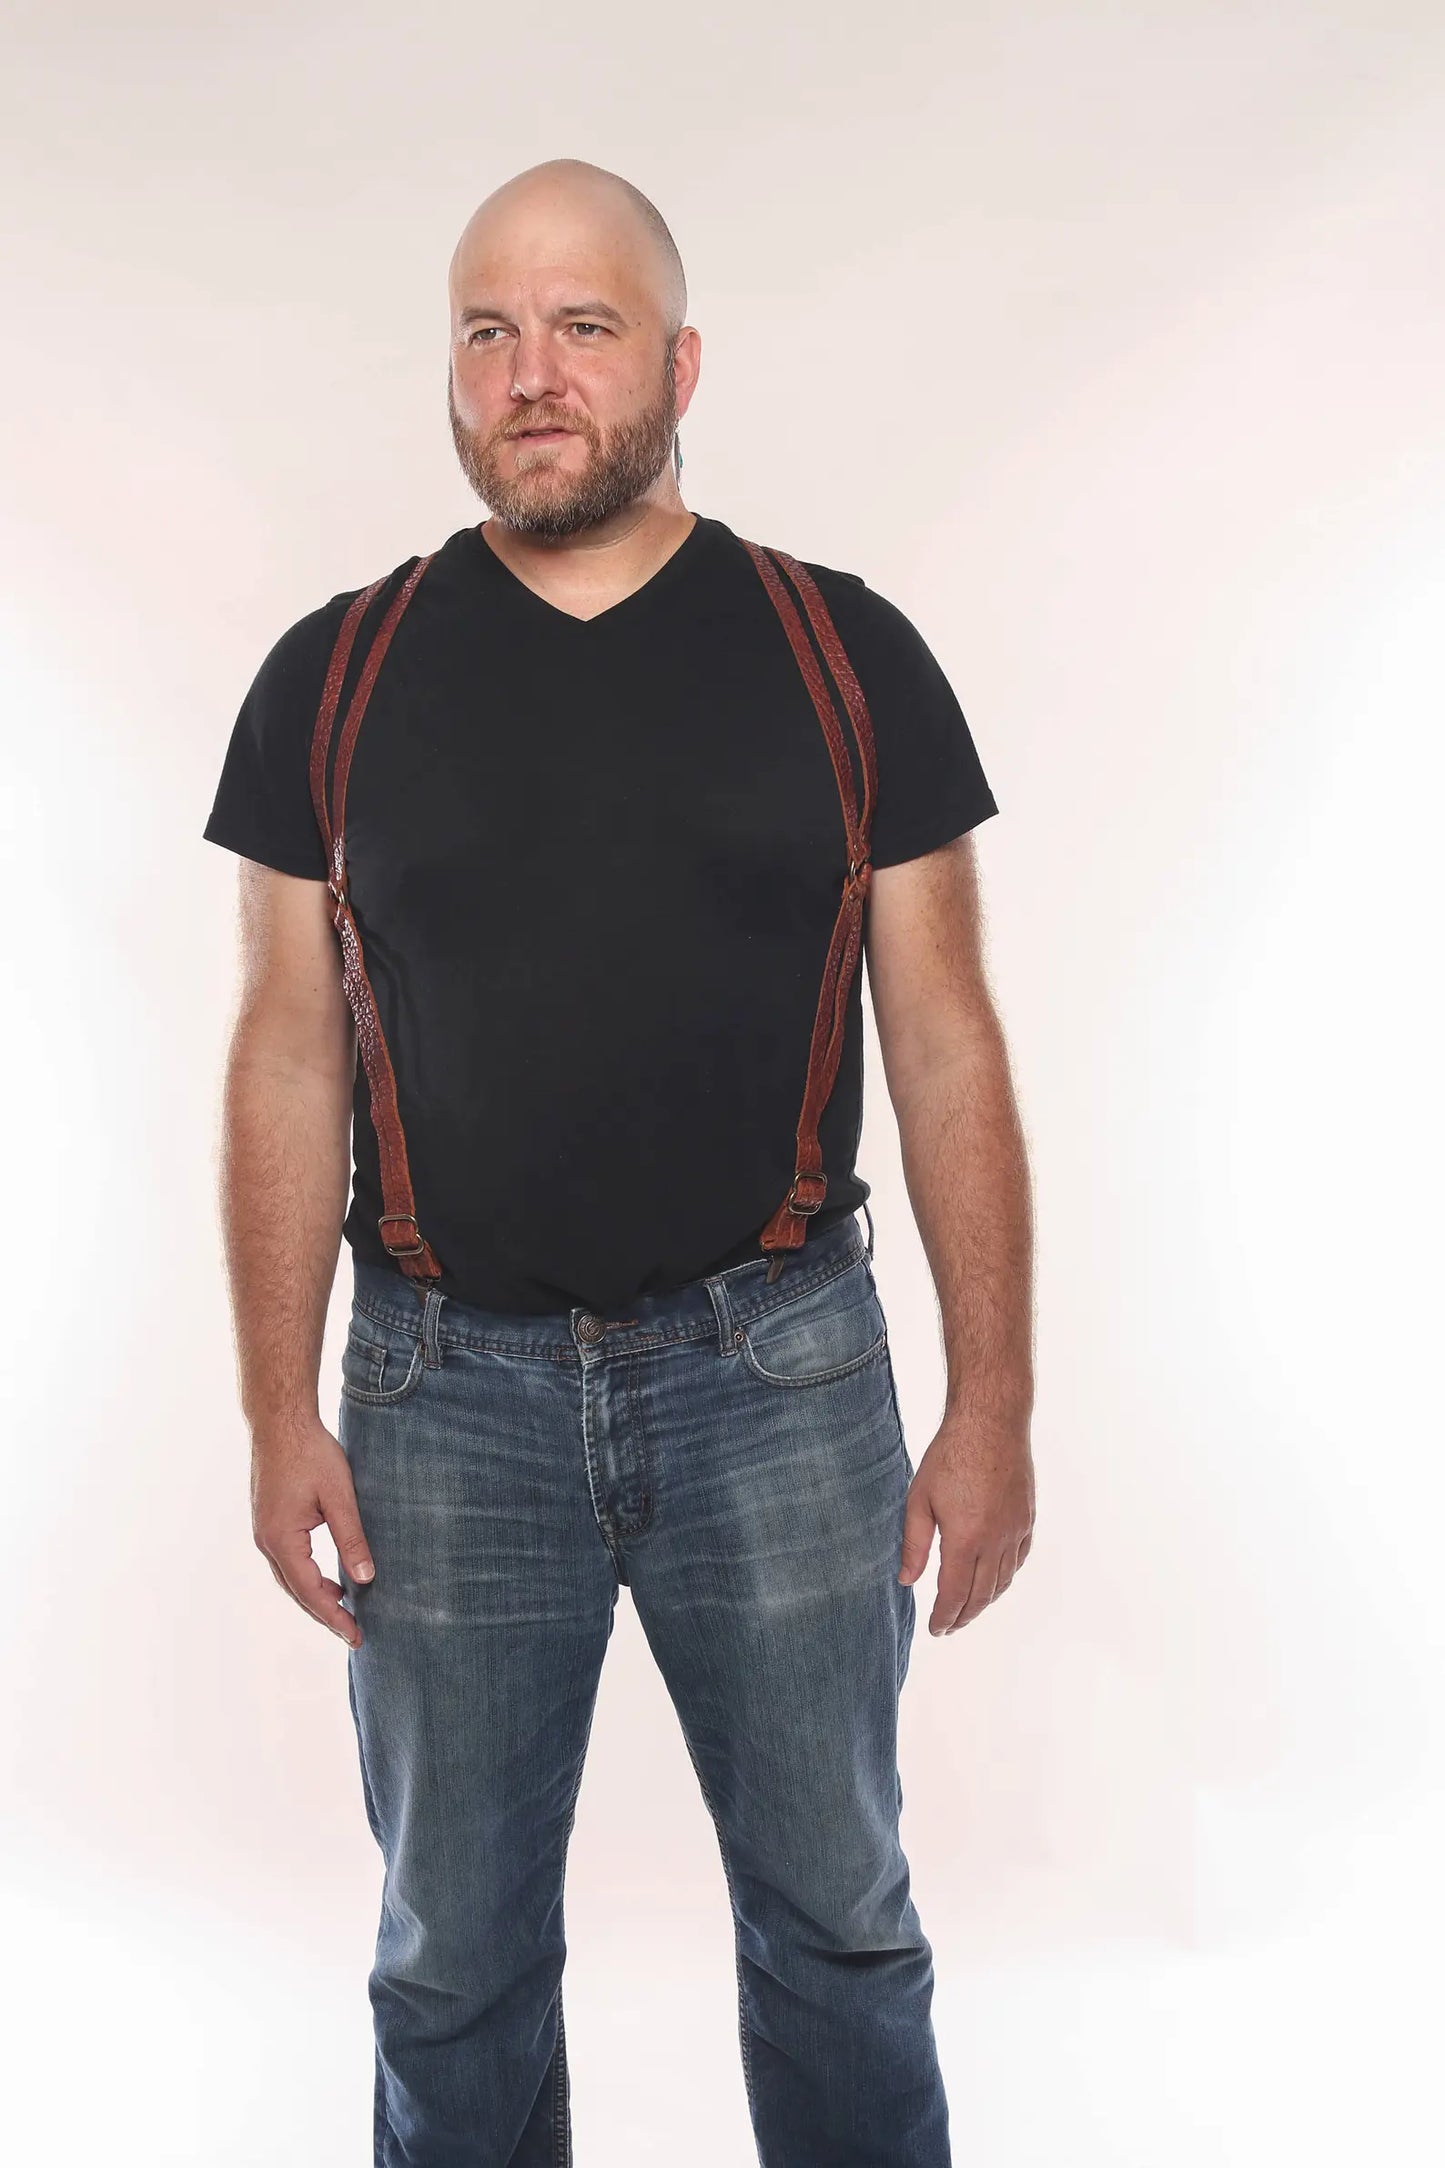 Martingale Leather Suspenders